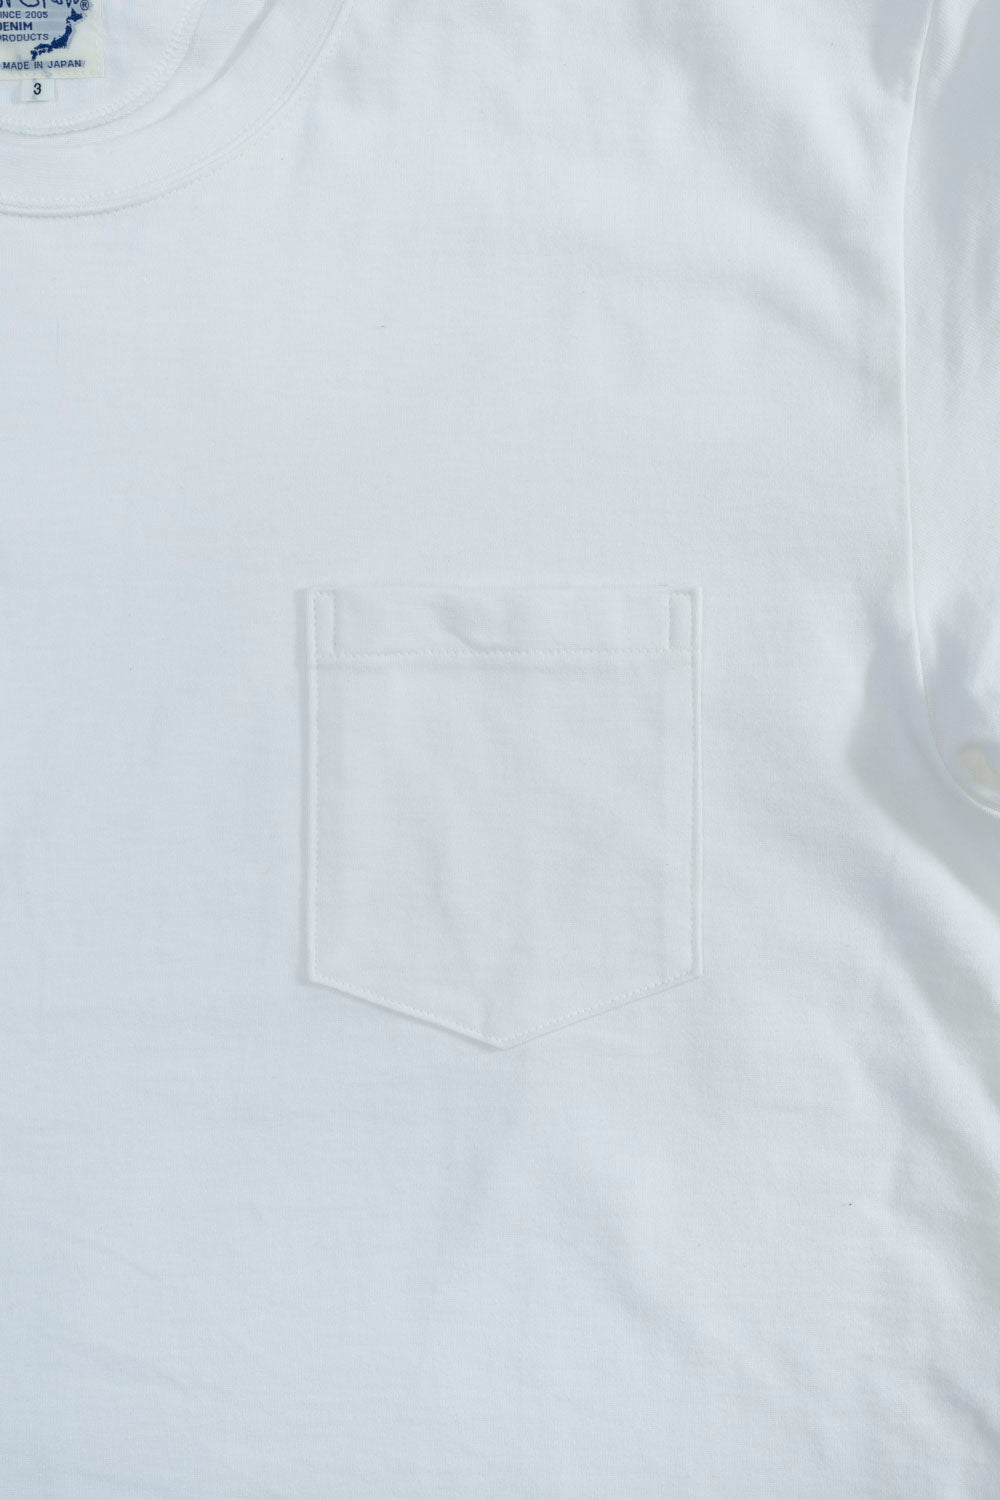 03-0017-69 - Pocket T-Shirt - White